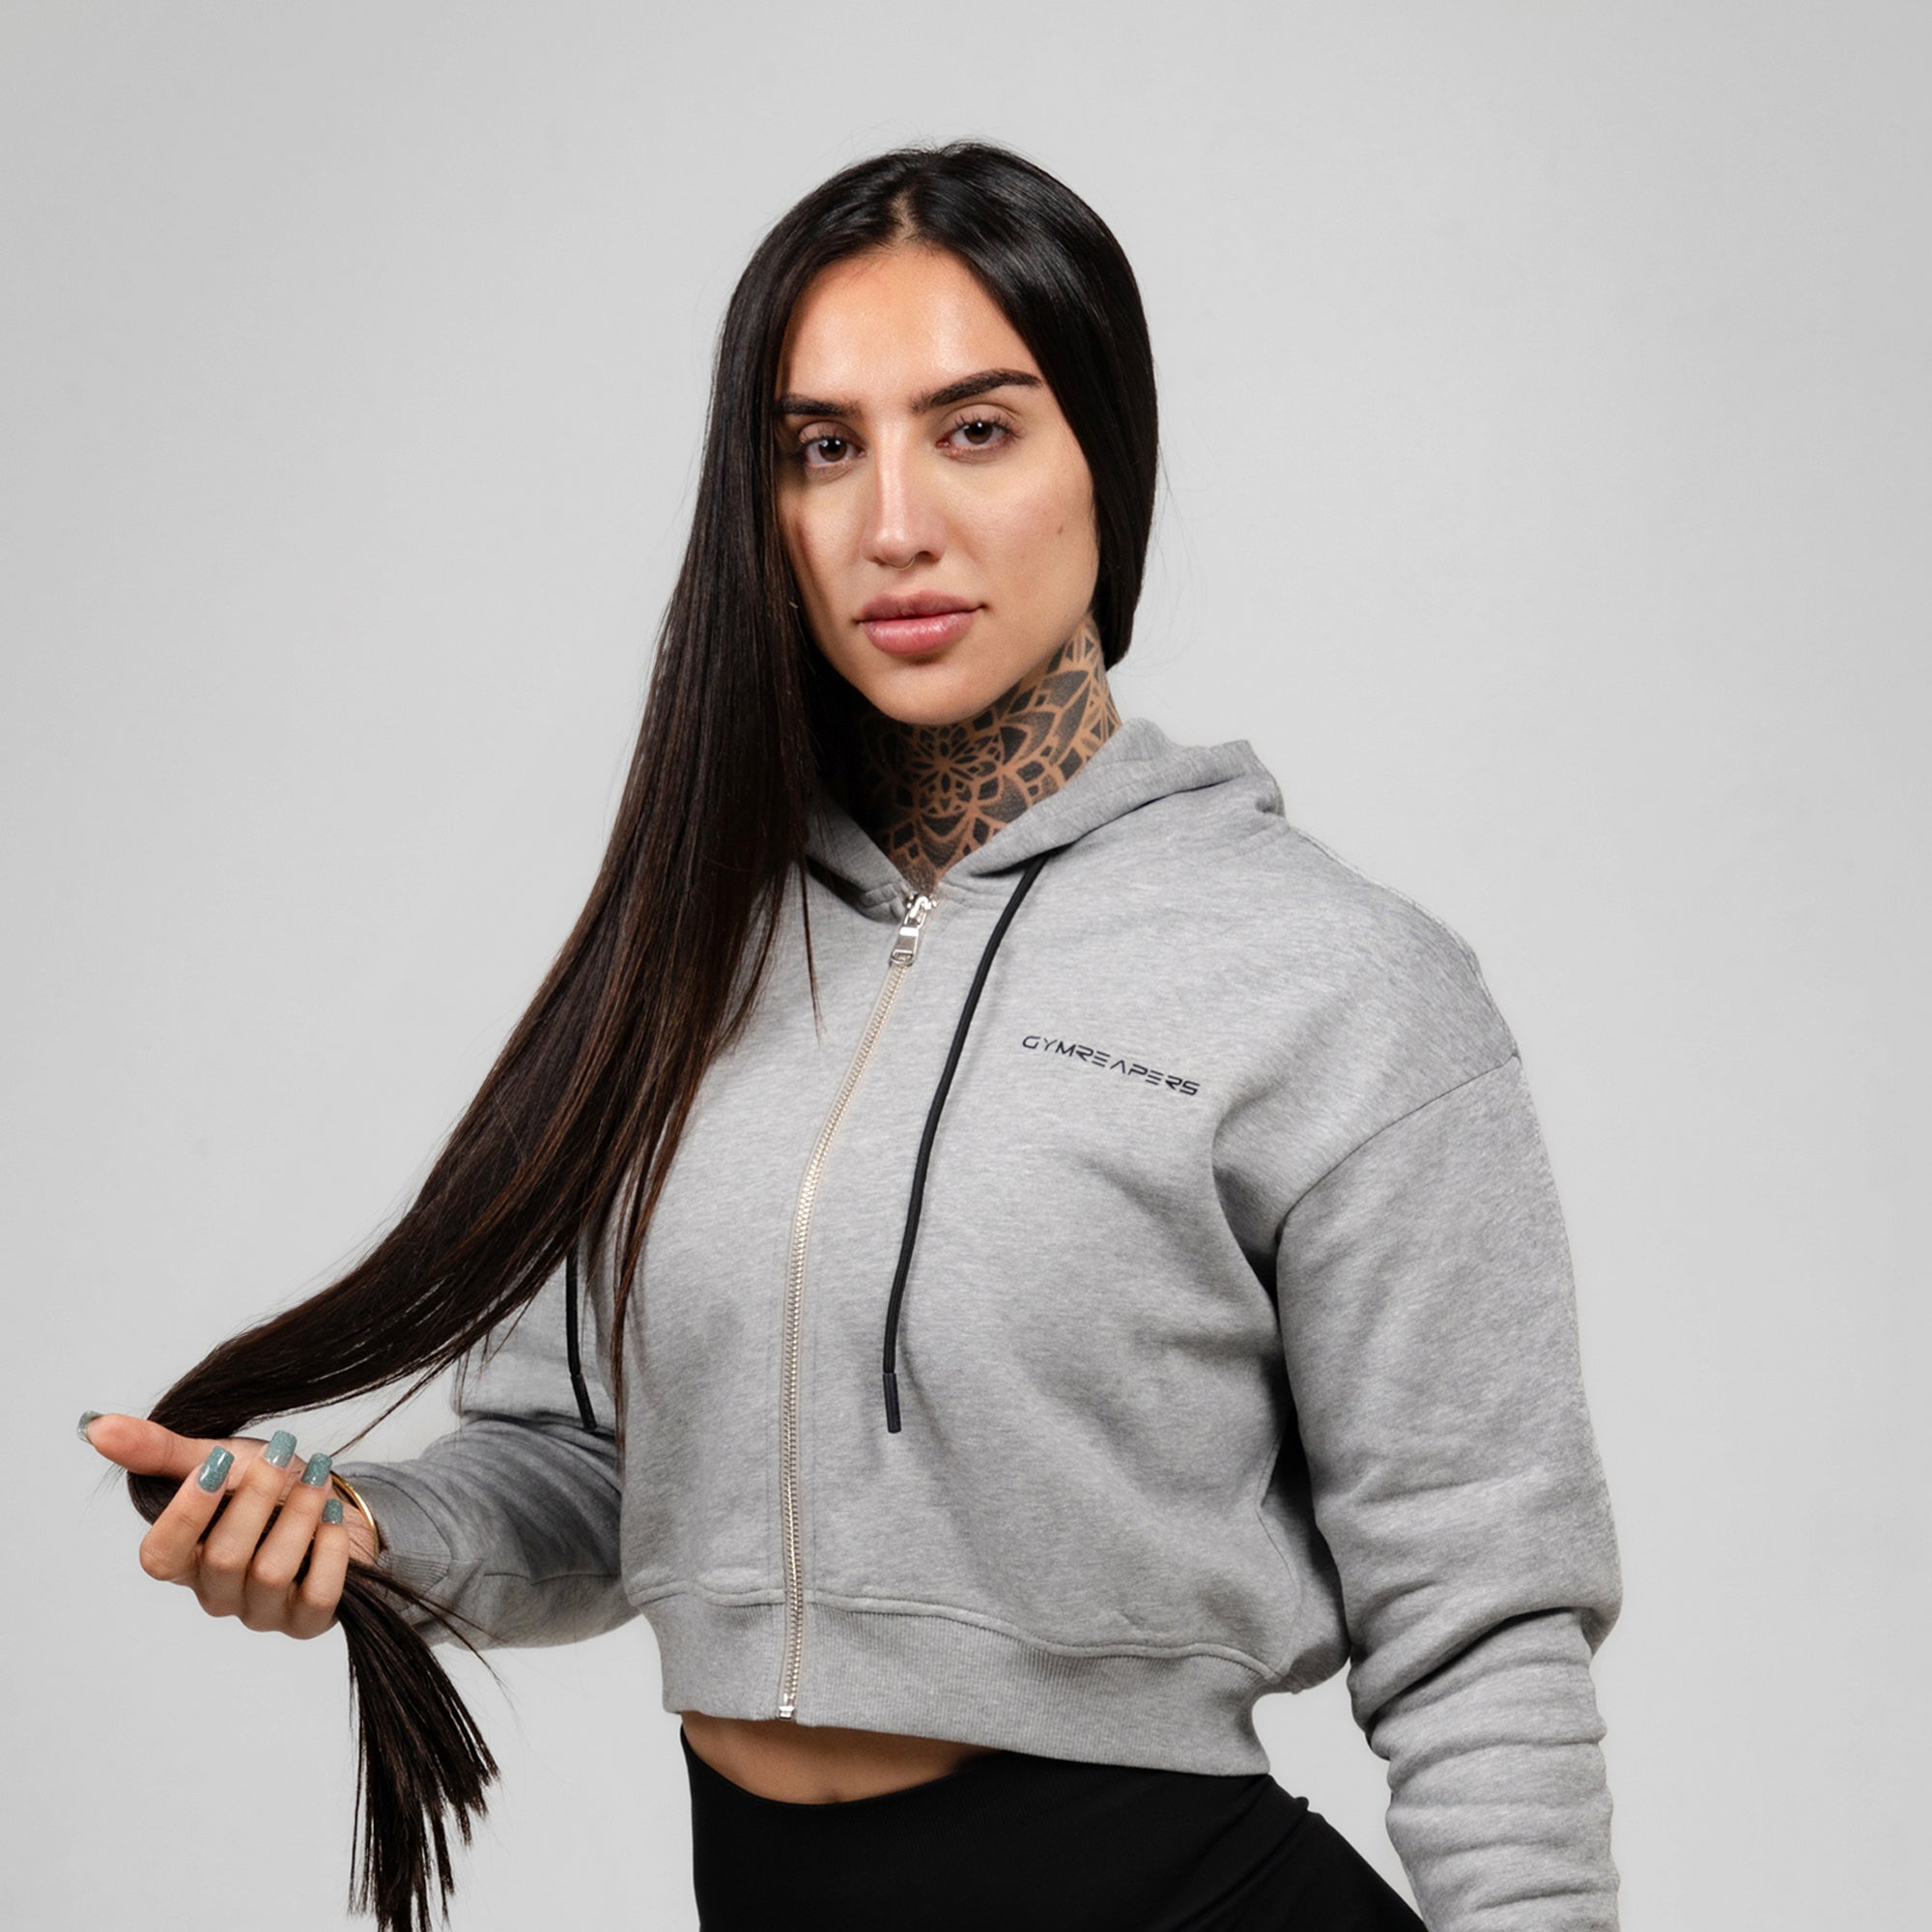 Basic Sizing Information  Zipper hoodie, Clothing company, Powerlifting